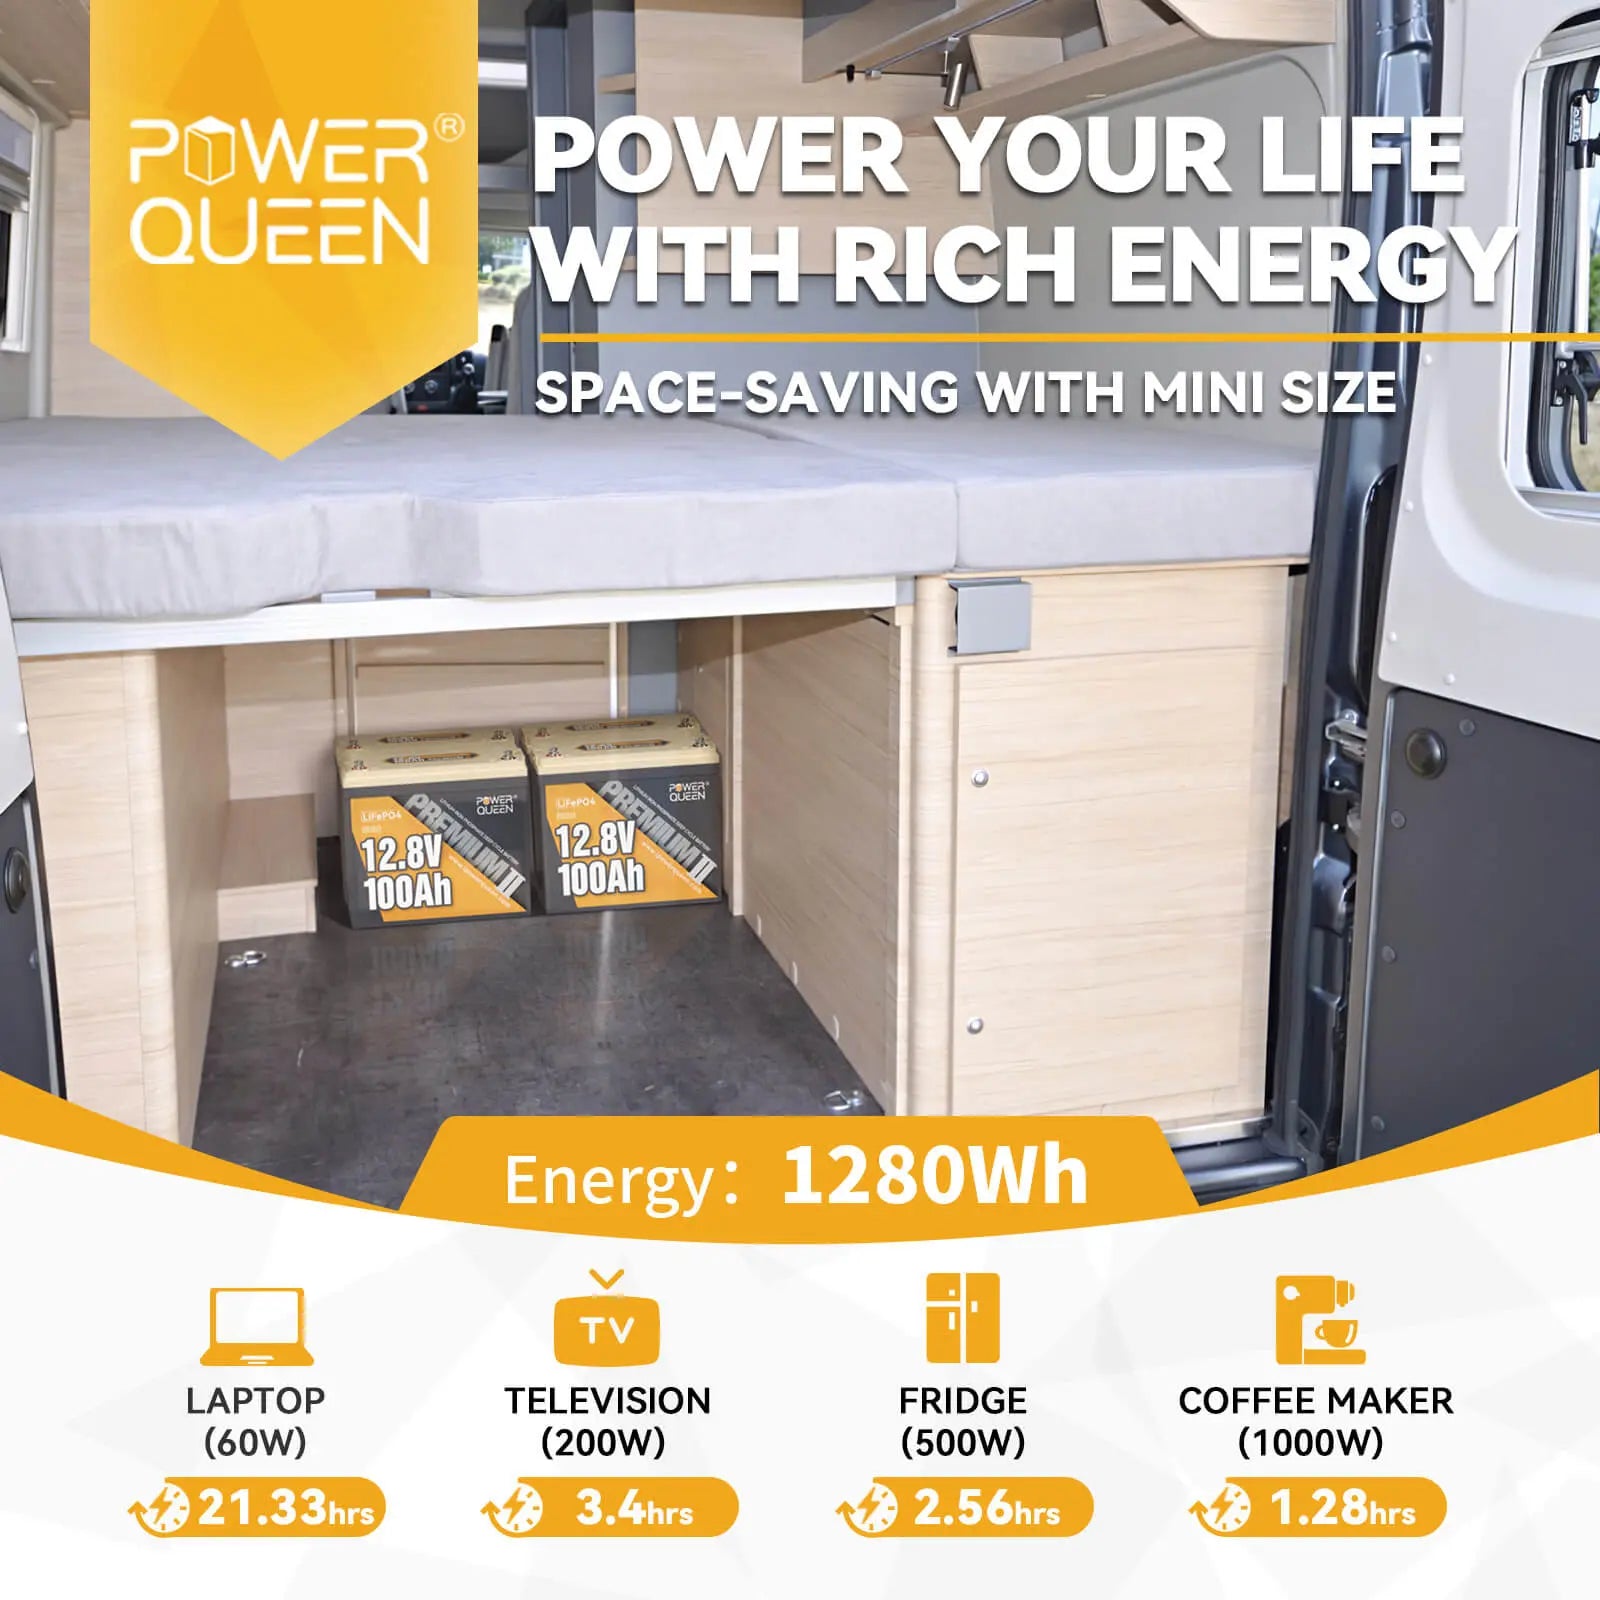 [Only $299.98] Power Queen 12.8V 100Ah Mini(Premium II) LiFePO4 Battery, Built-in 100A BMS Power Queen